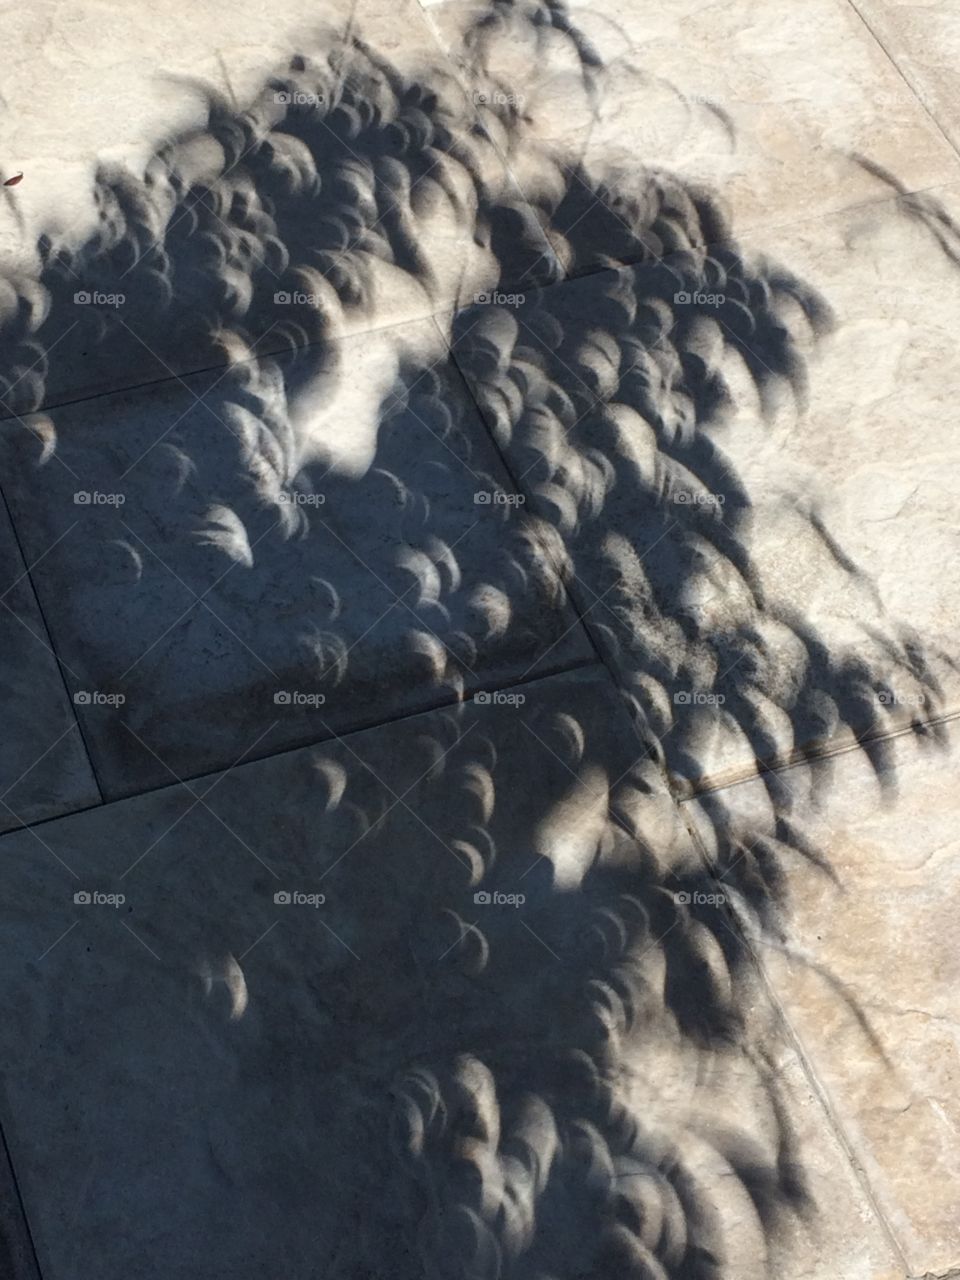 Eclipse shadows 